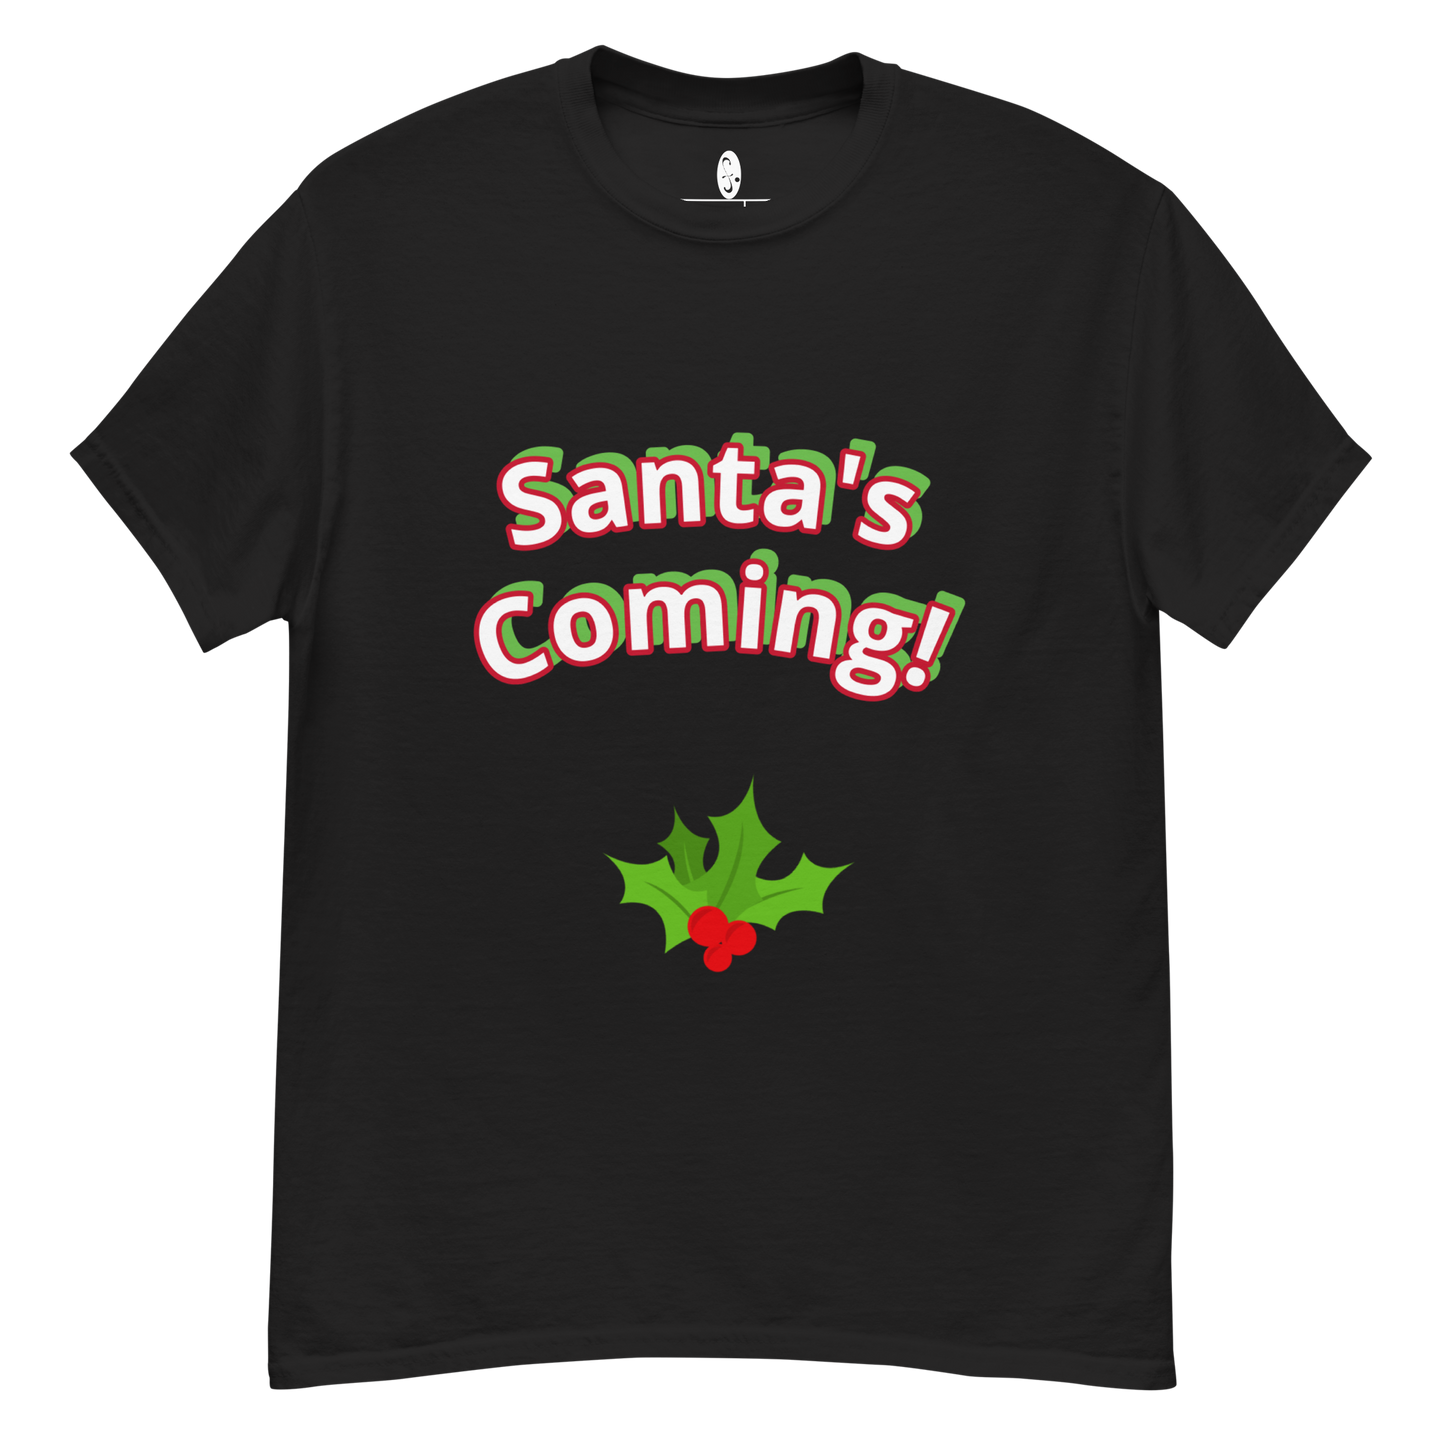 Santa's Coming Tee